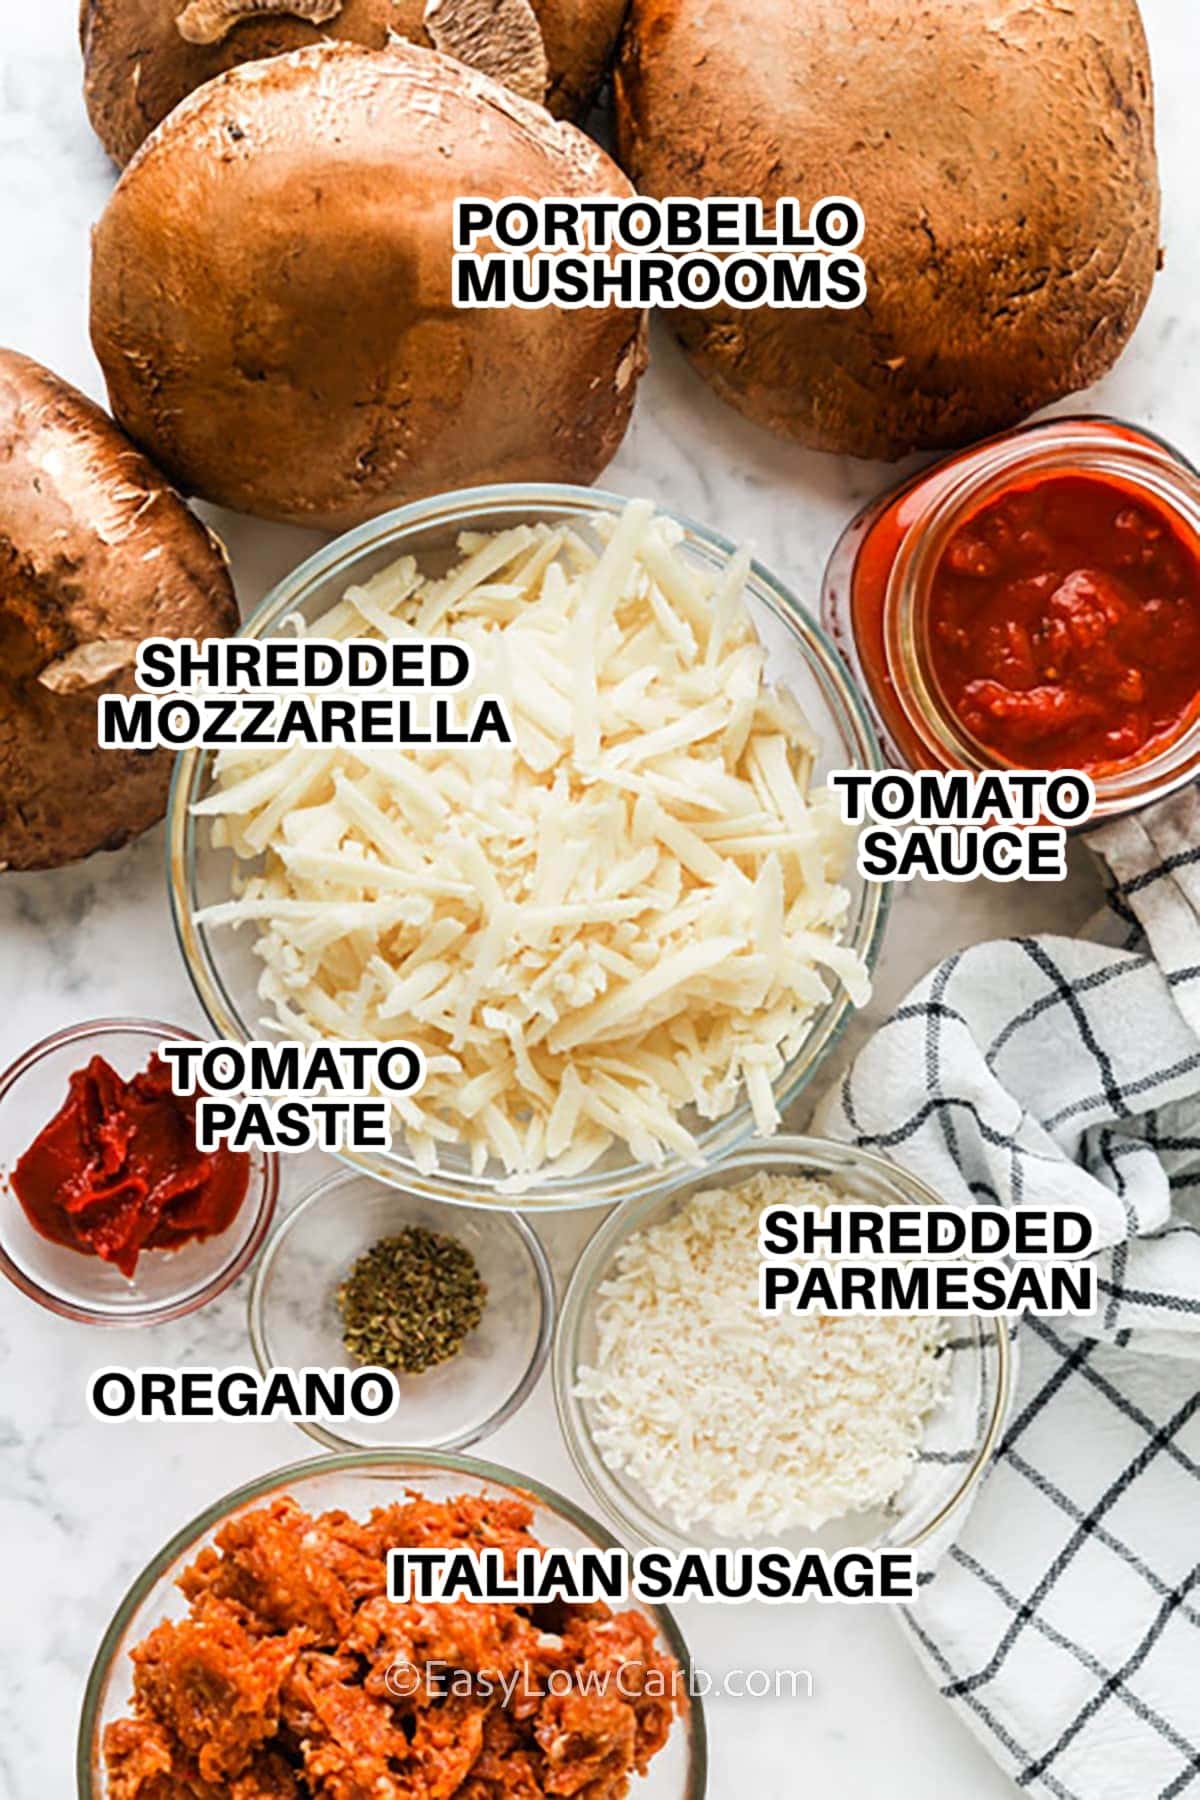 Ingredients to make Portobello Mushroom Pizza labeled: portobello mushrooms, shredded mozzarella, tomato sauce, shredded parmesan, tomato paste, oregano, and Italian Sausage